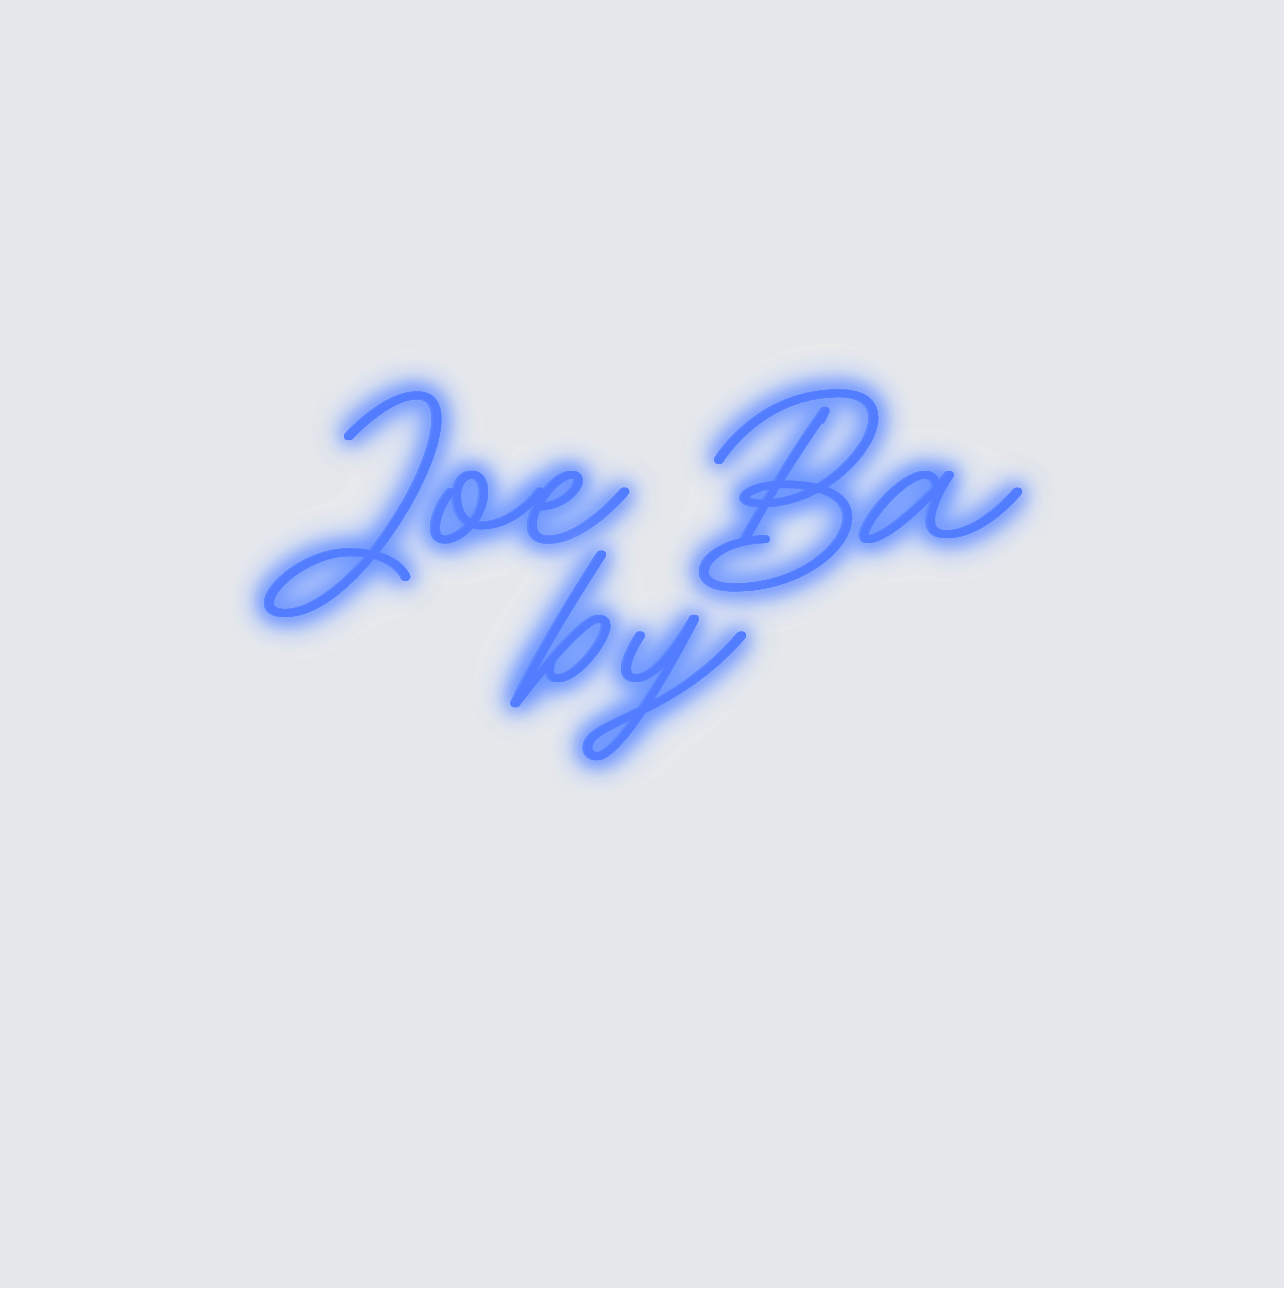 Custom neon sign - Joe Baby